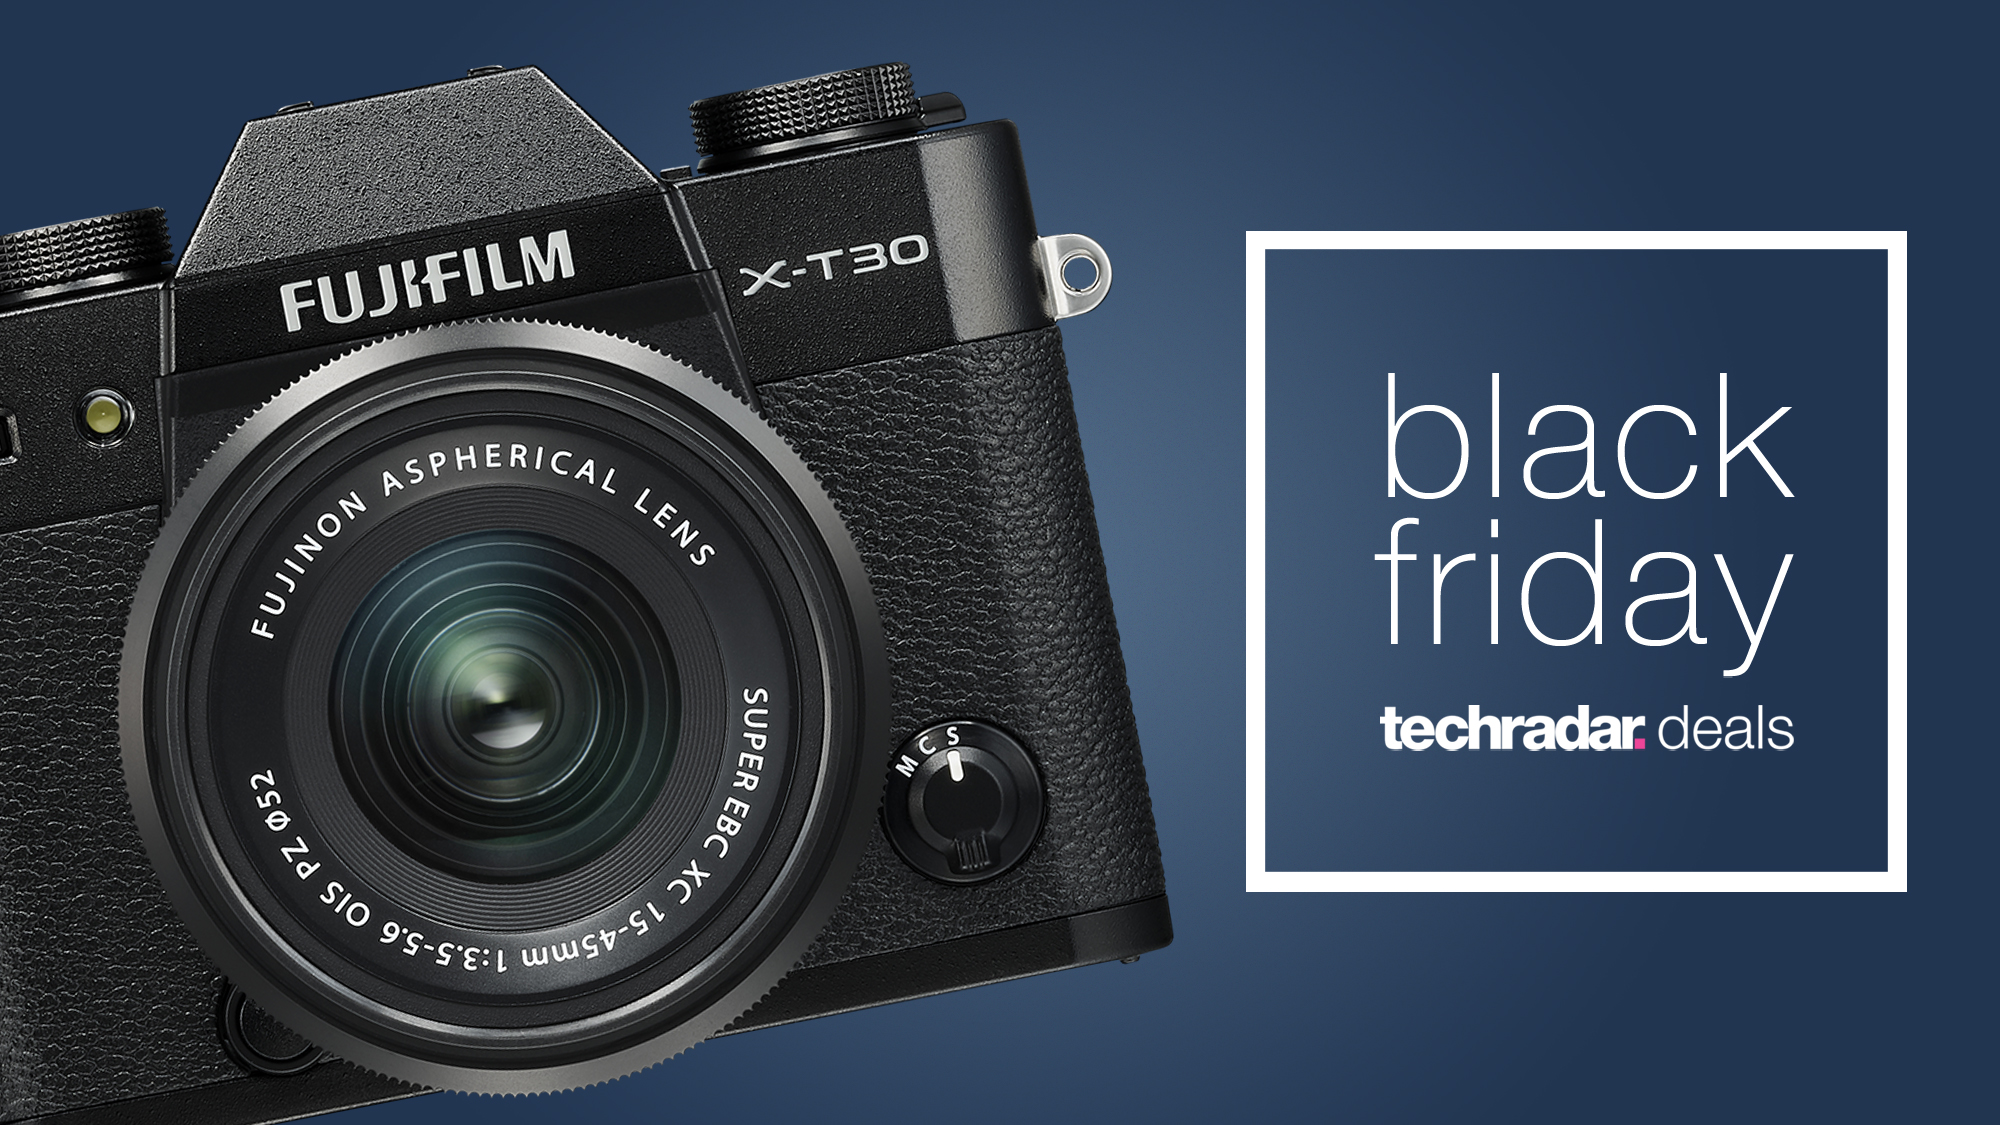 The Fujifilm X-T30 II camera next to a Black Friday logo